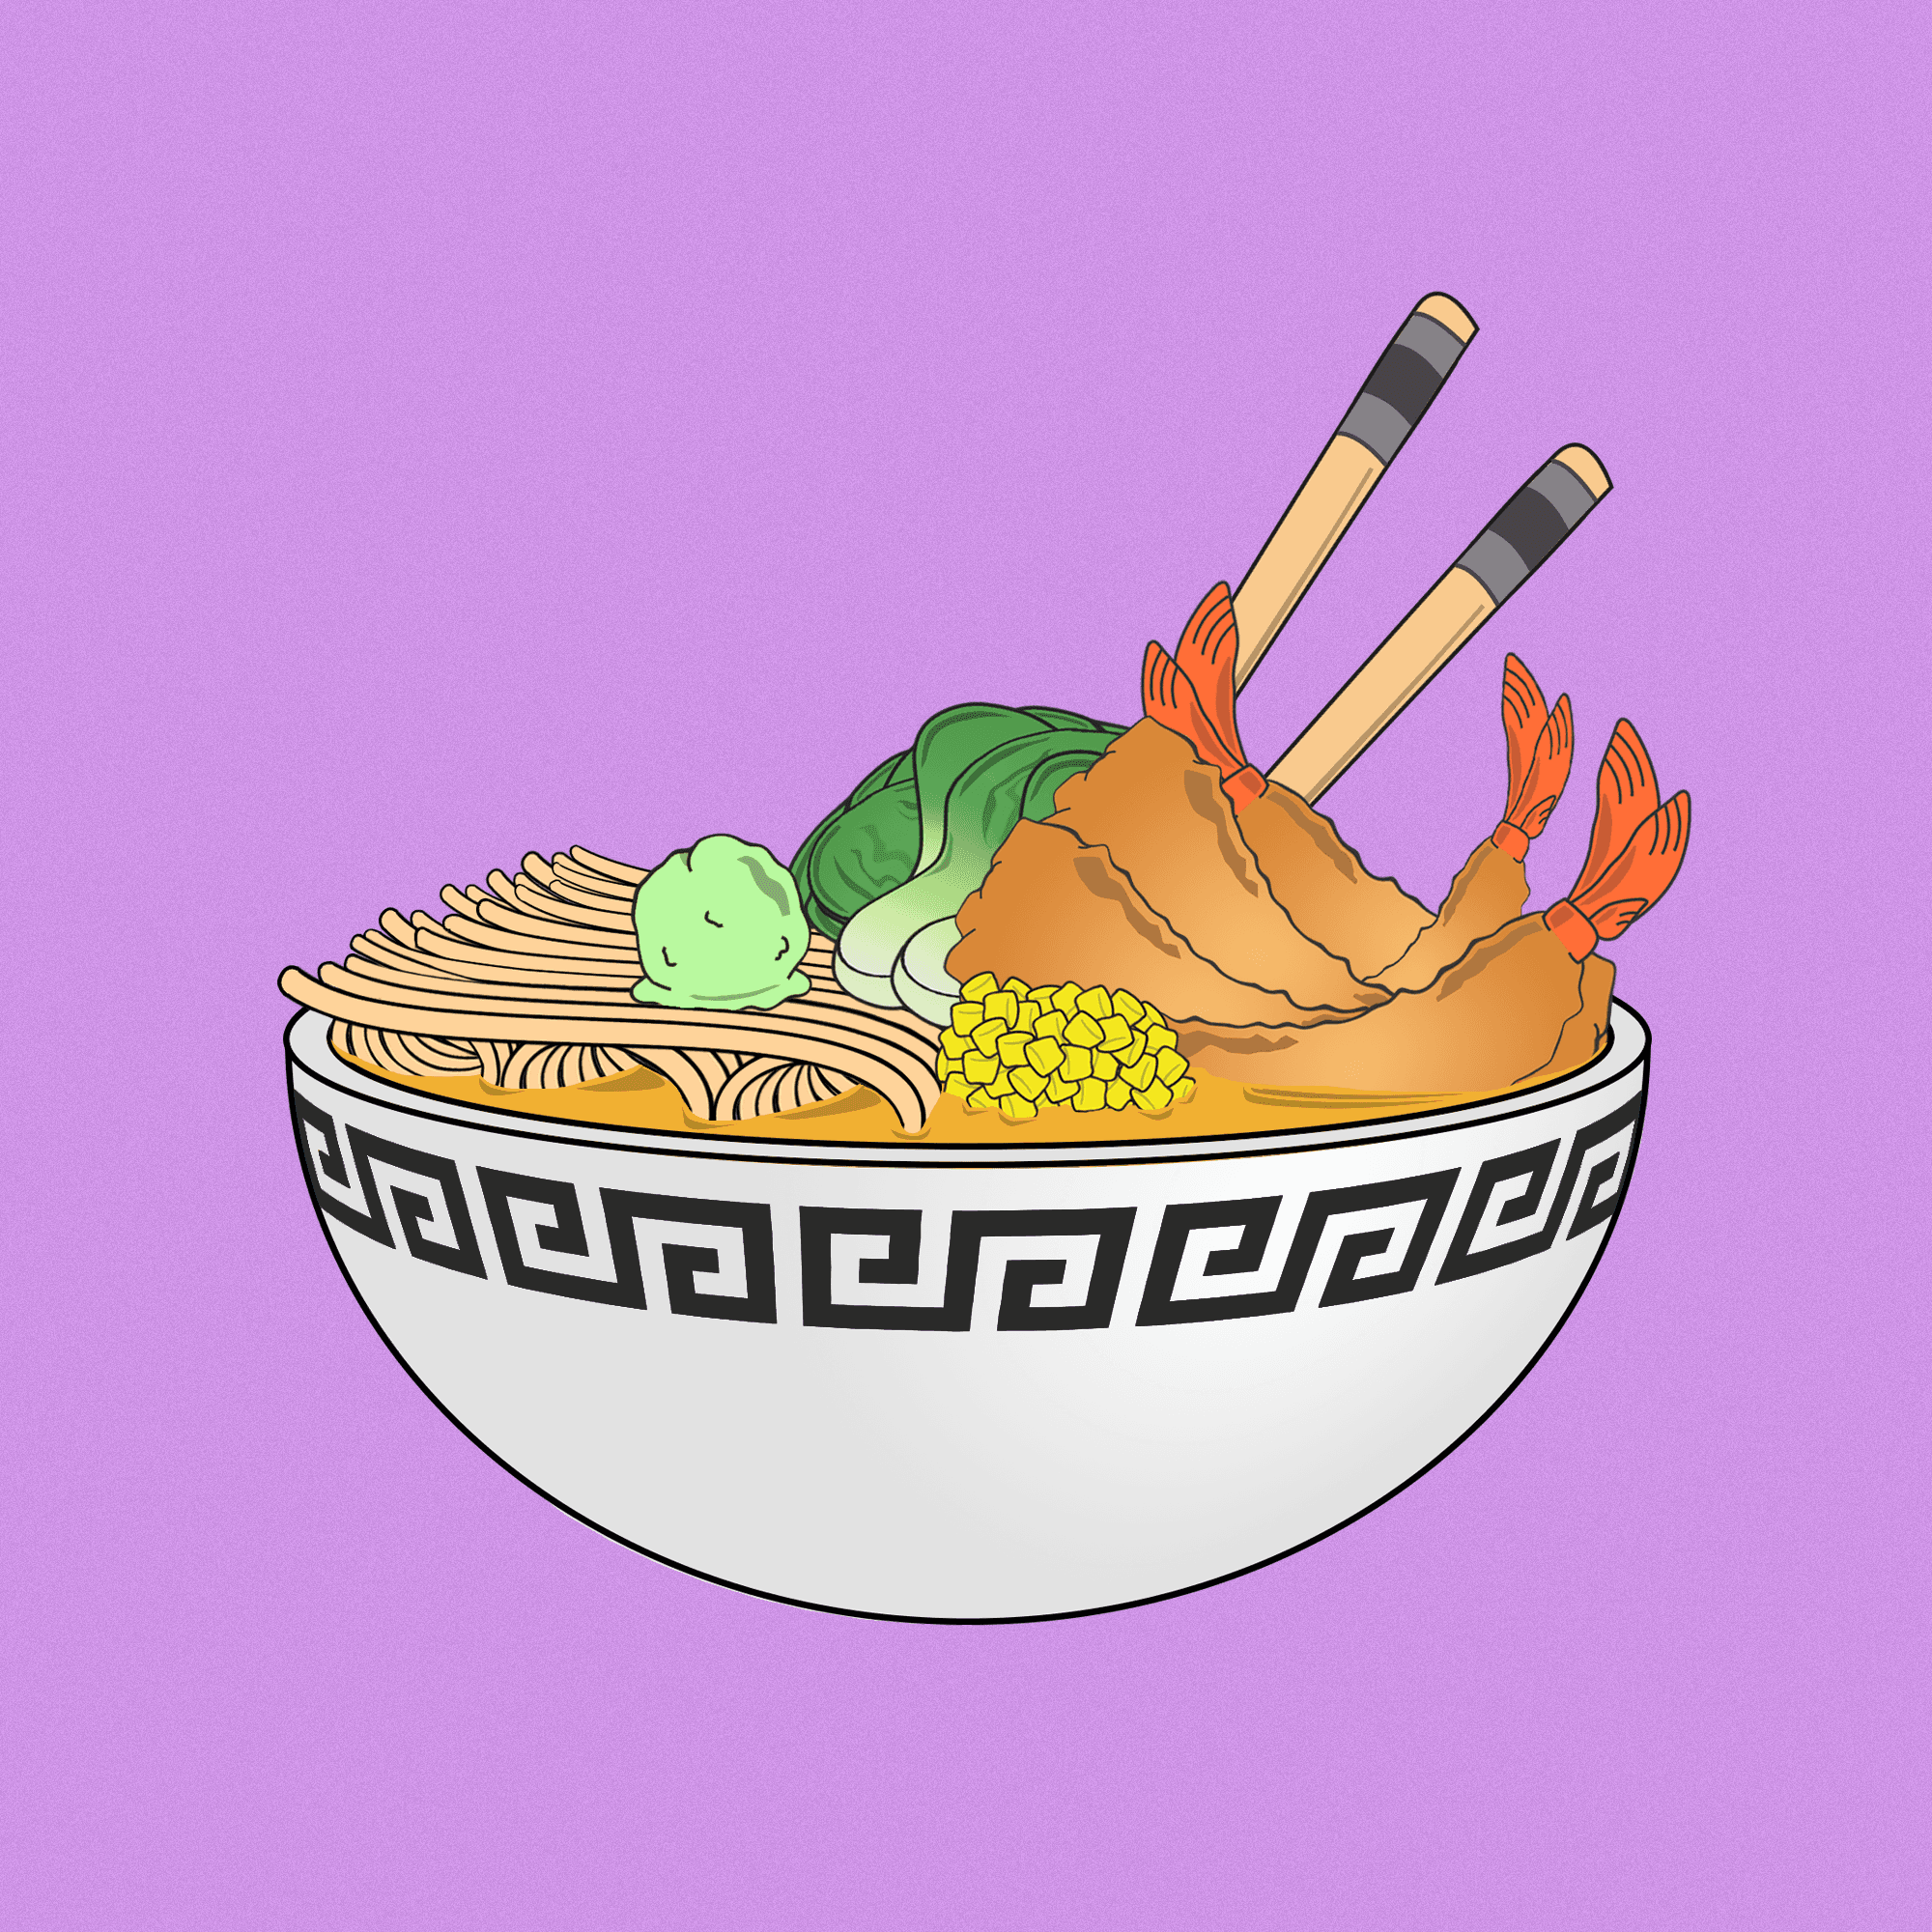 Noodl #43